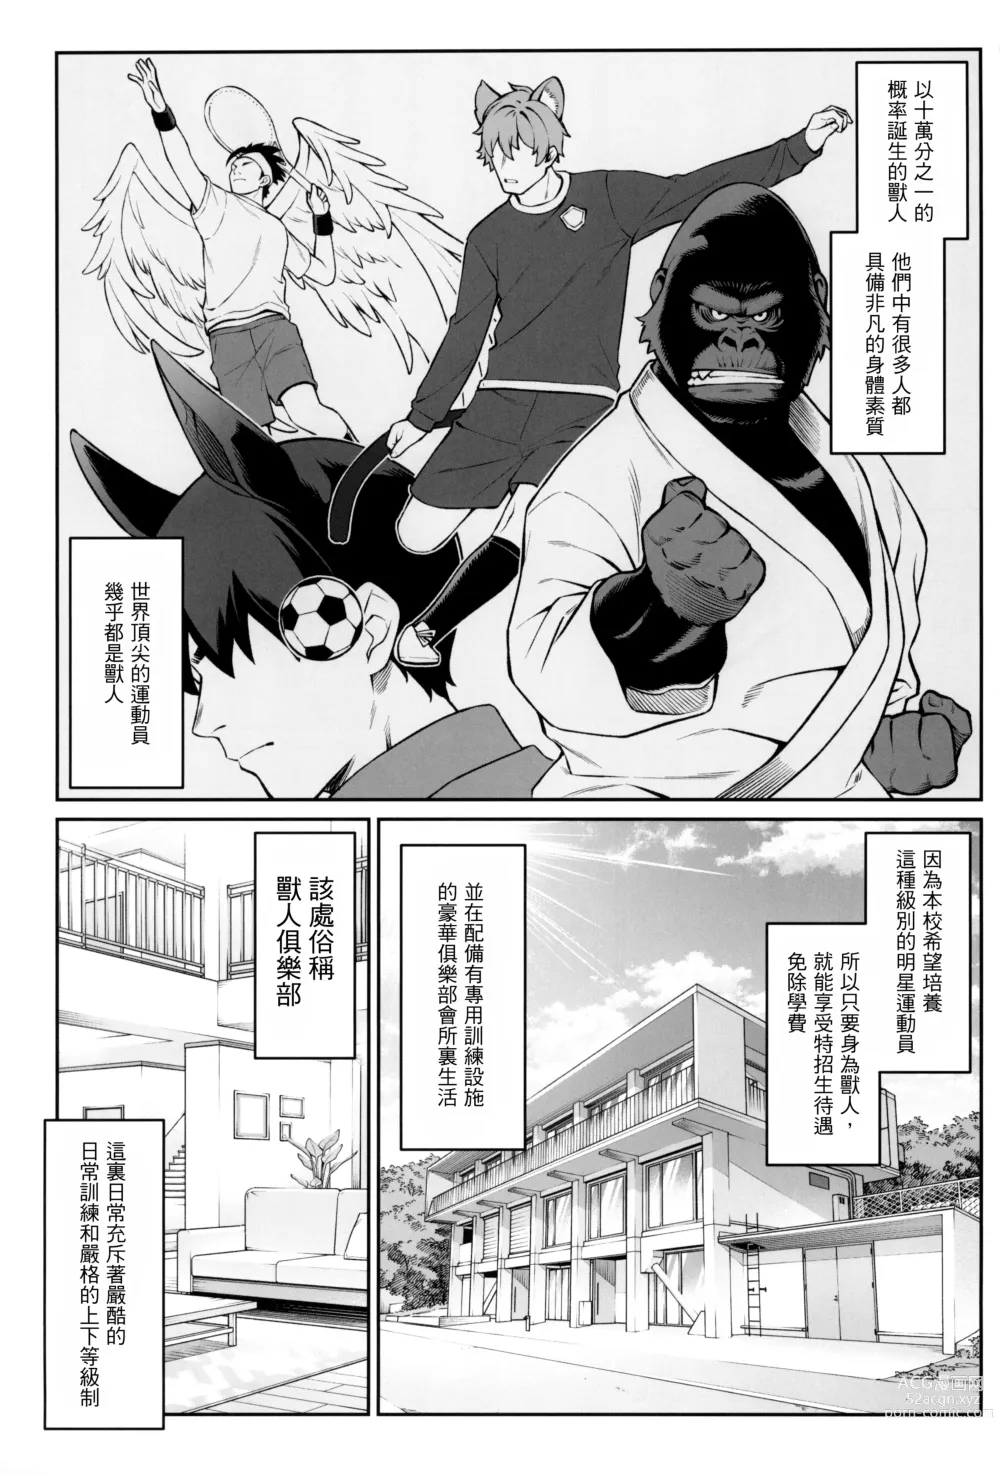 Page 7 of doujinshi Hoshoku Club